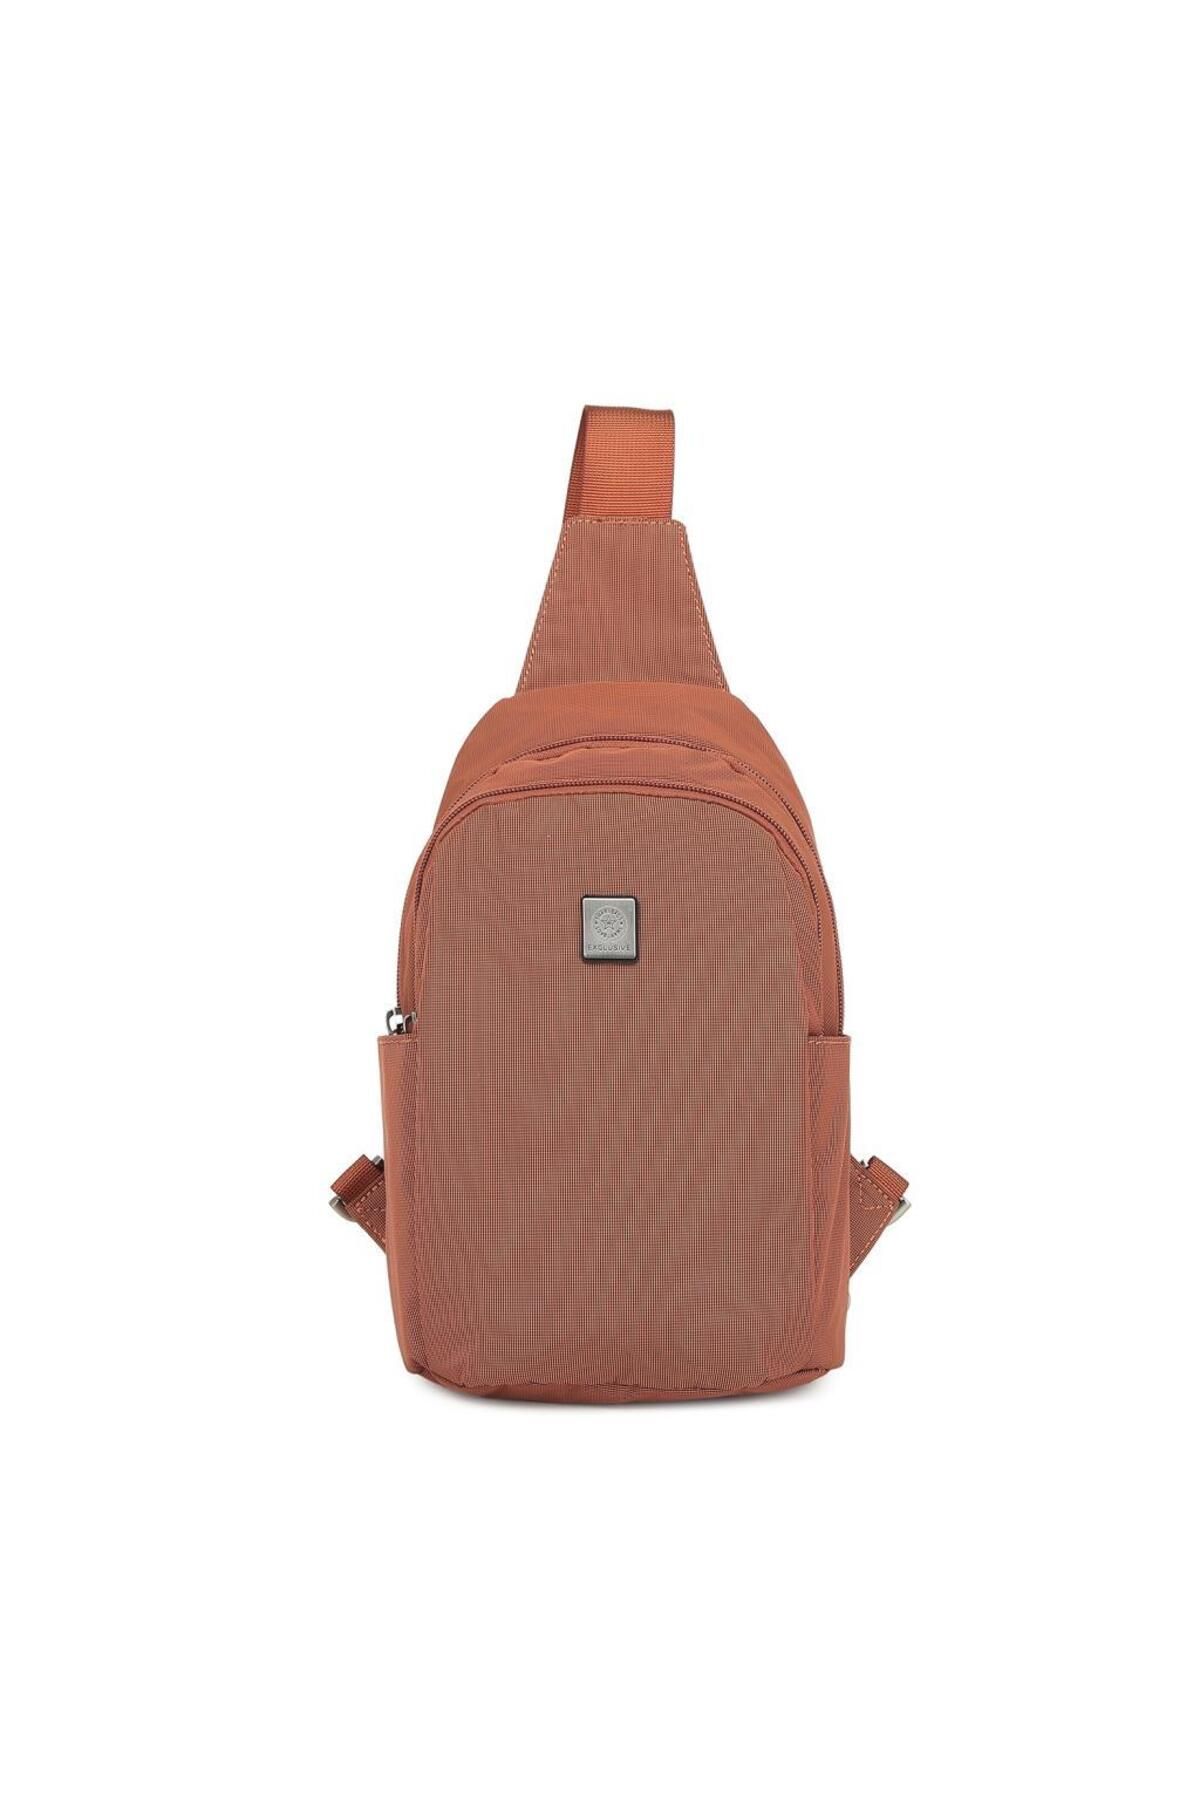 Smart Bags Exclusive Serisi Uniseks Bodybag Omuz Çantası Smart Bags 8733